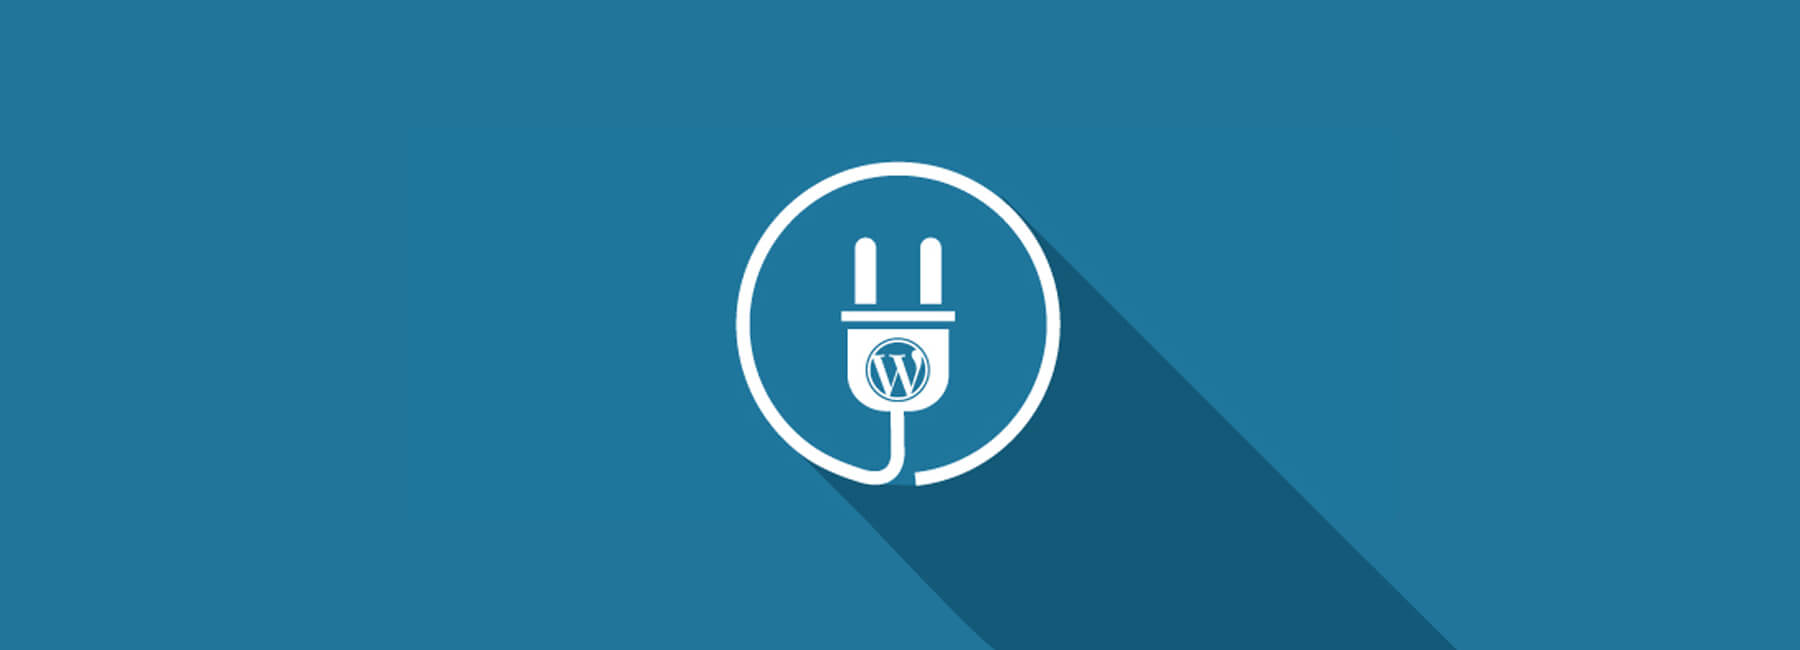 Mopinion now offers a feedback plugin for WordPress